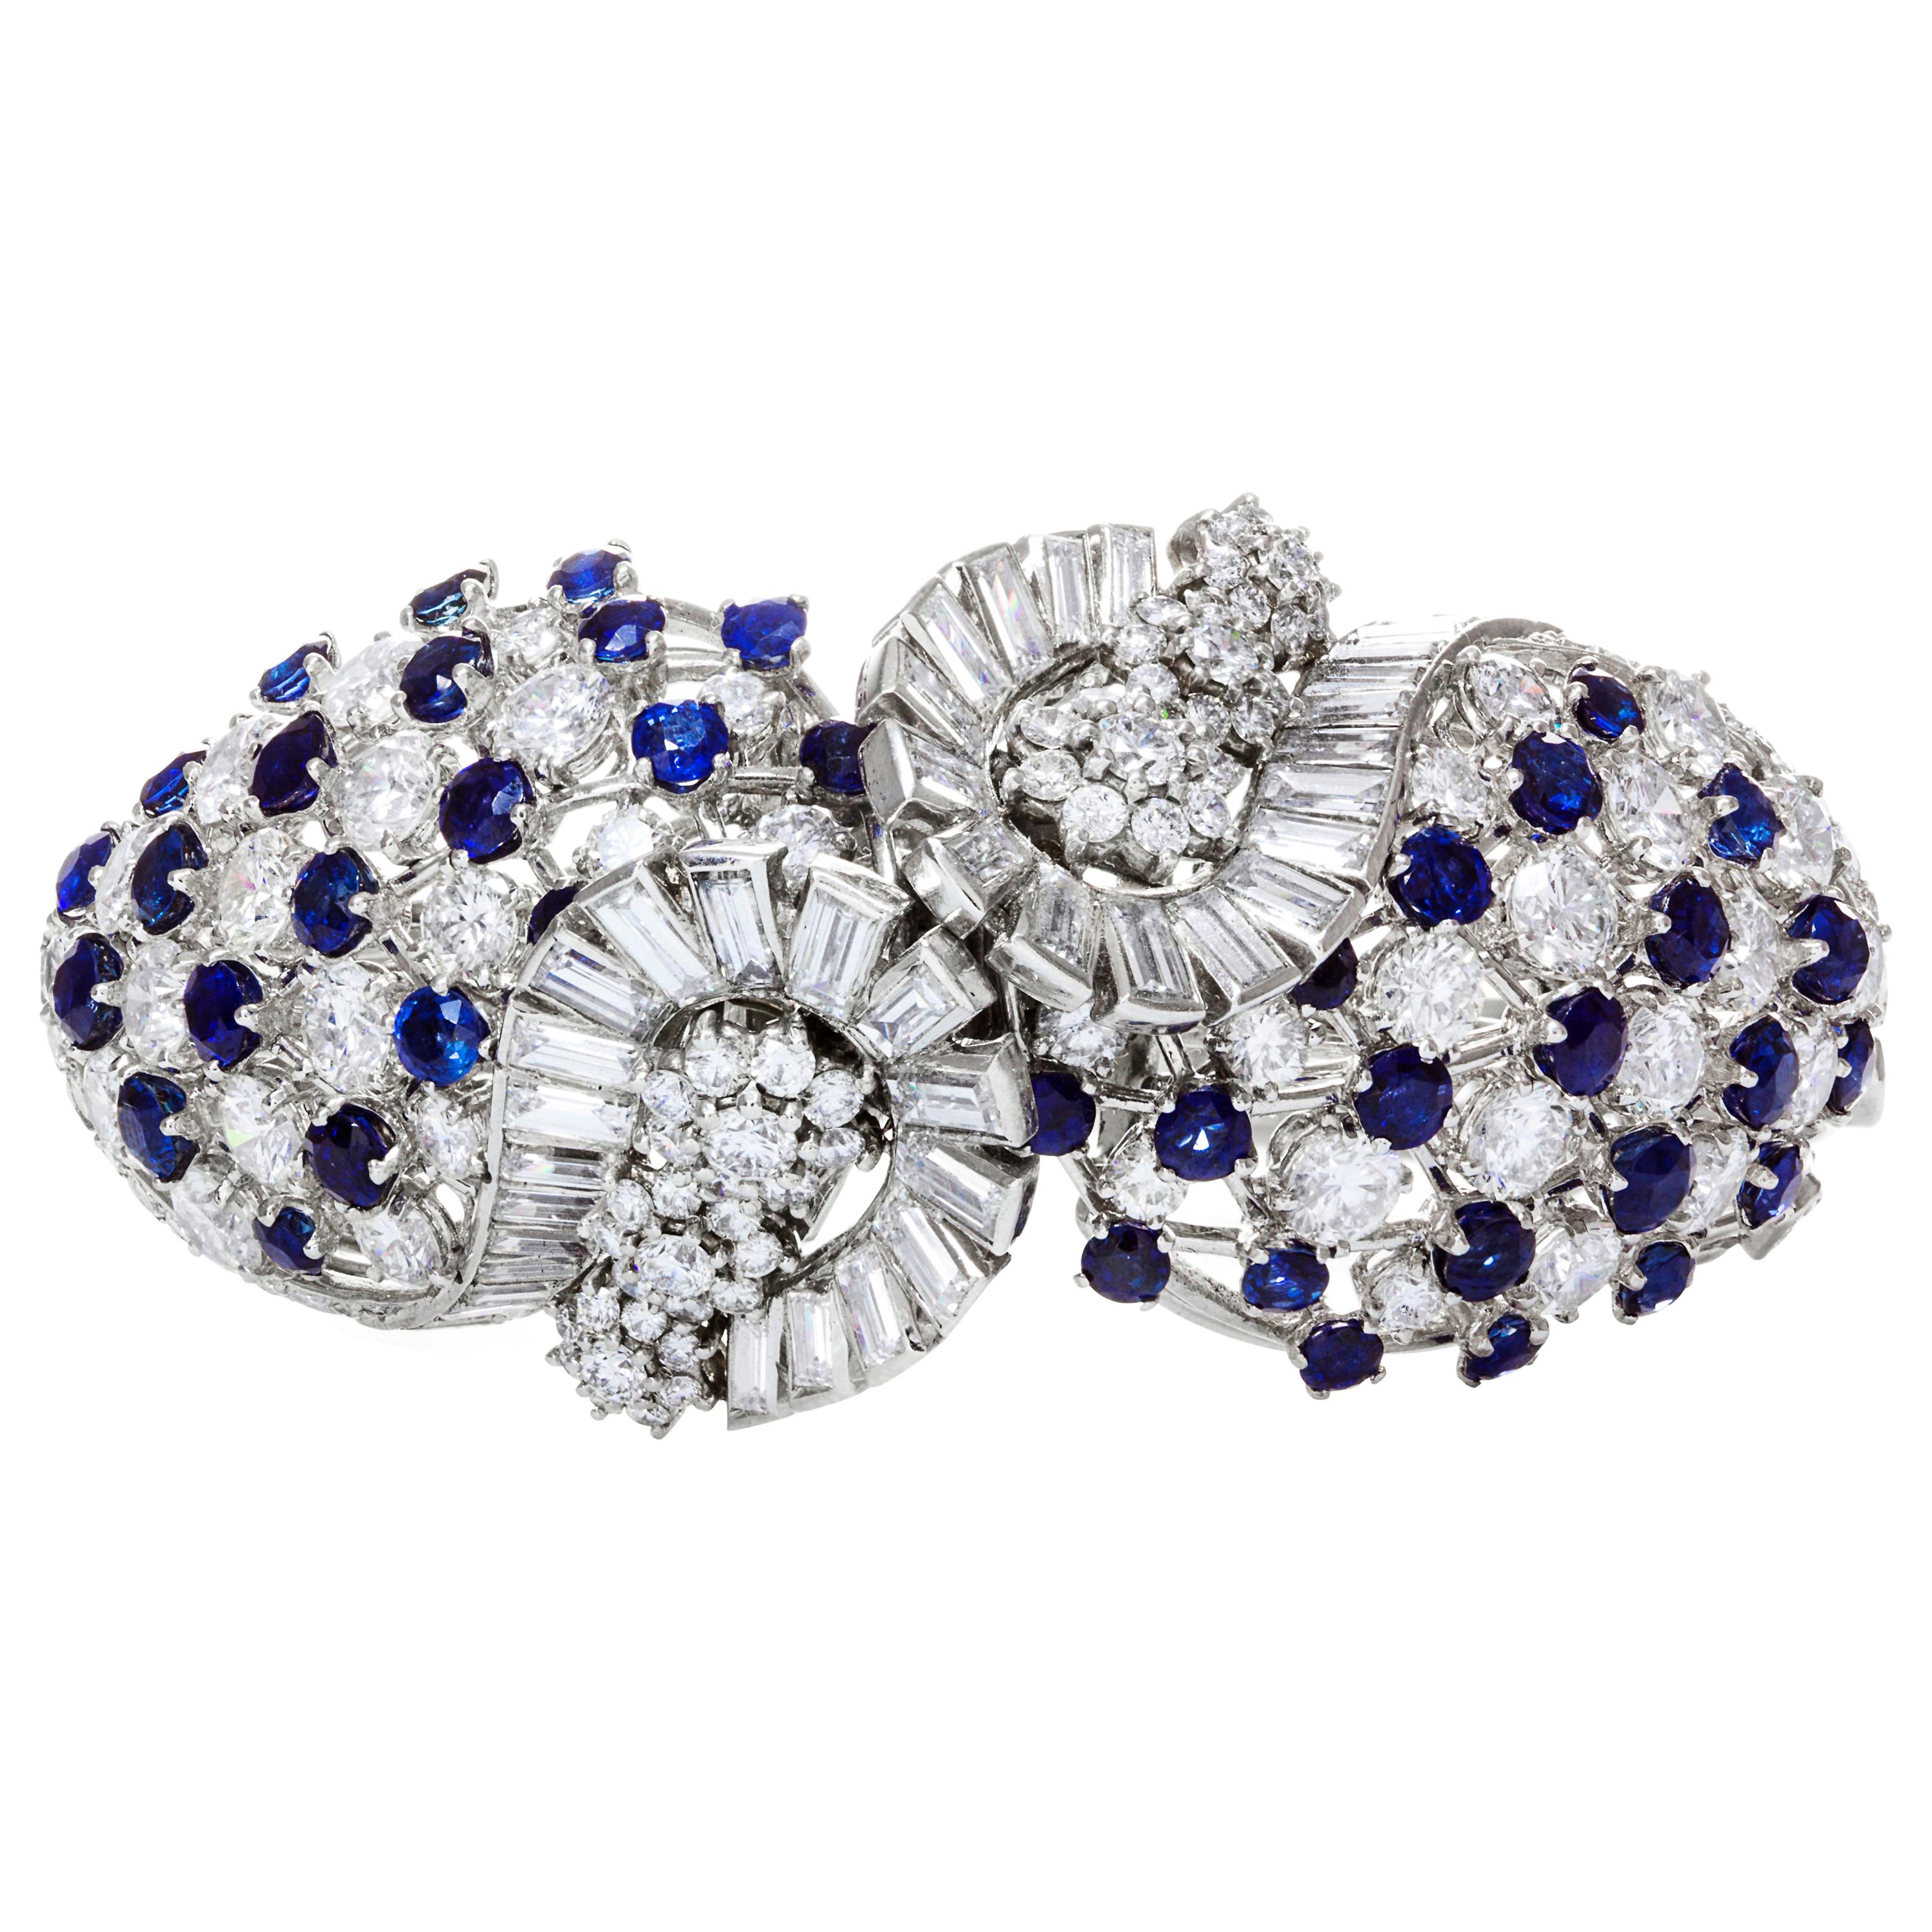 27.08 Carats Total Round Cut Blue Sapphire & Diamond Open-Work Bracelet/Brooch For Sale